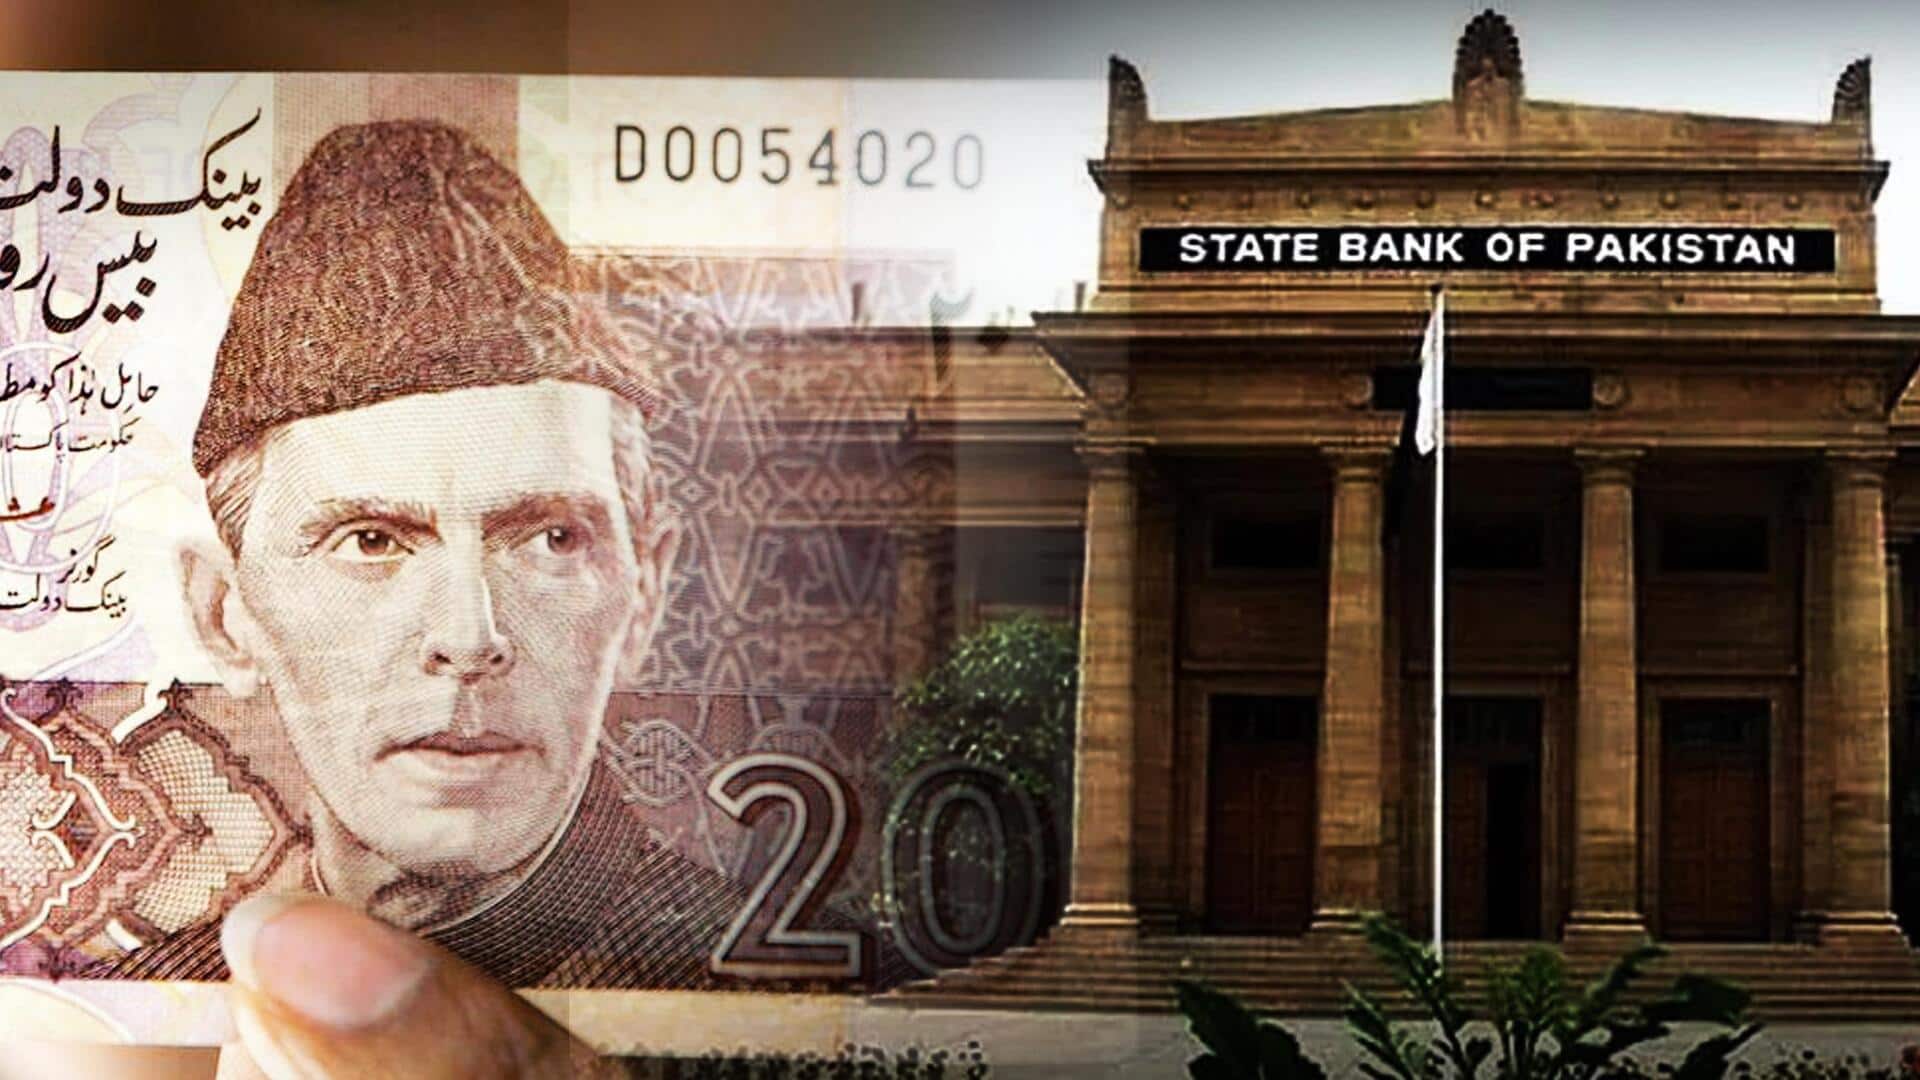 Pakistan's central bank clarifies after half-printed Rs. 1,000 banknotes circulated